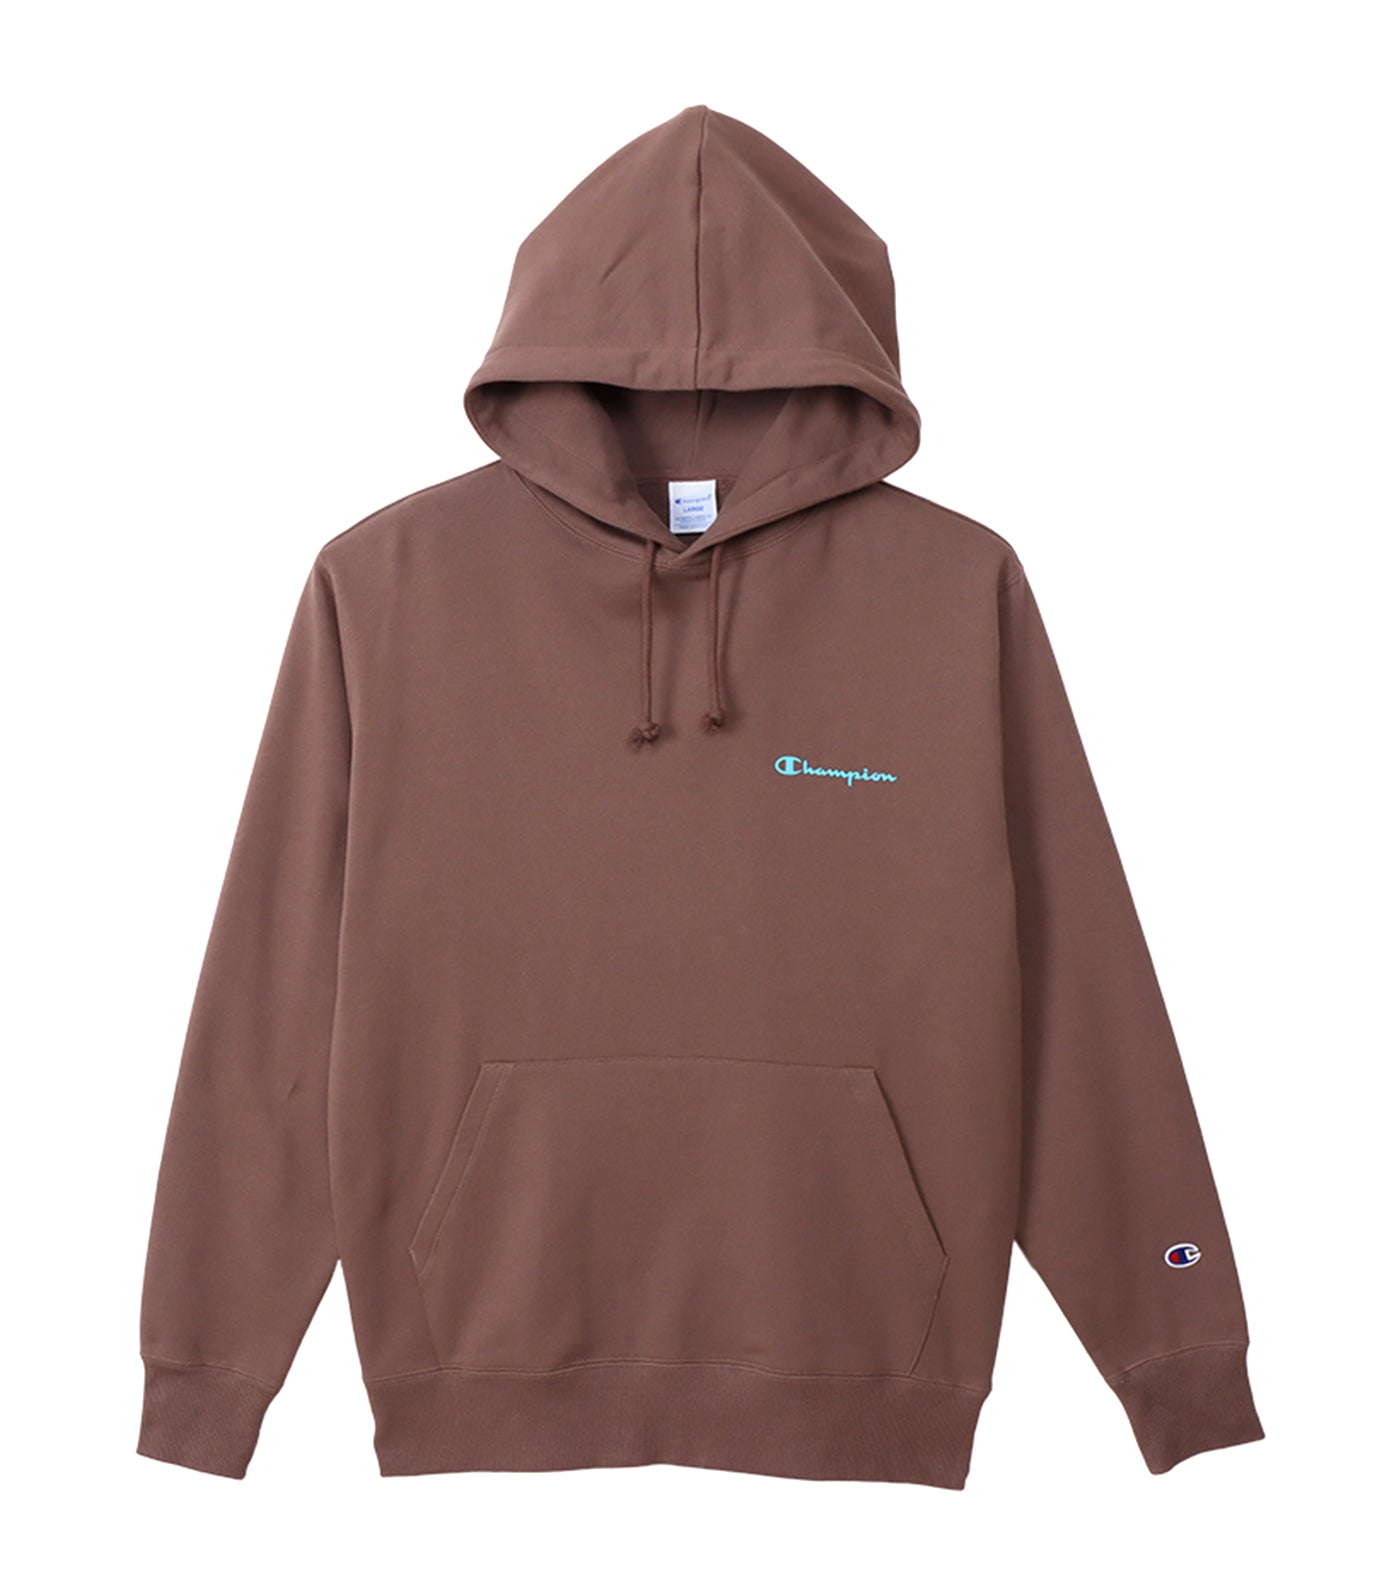 Japan Line Hooded Sweatshirt Mocha